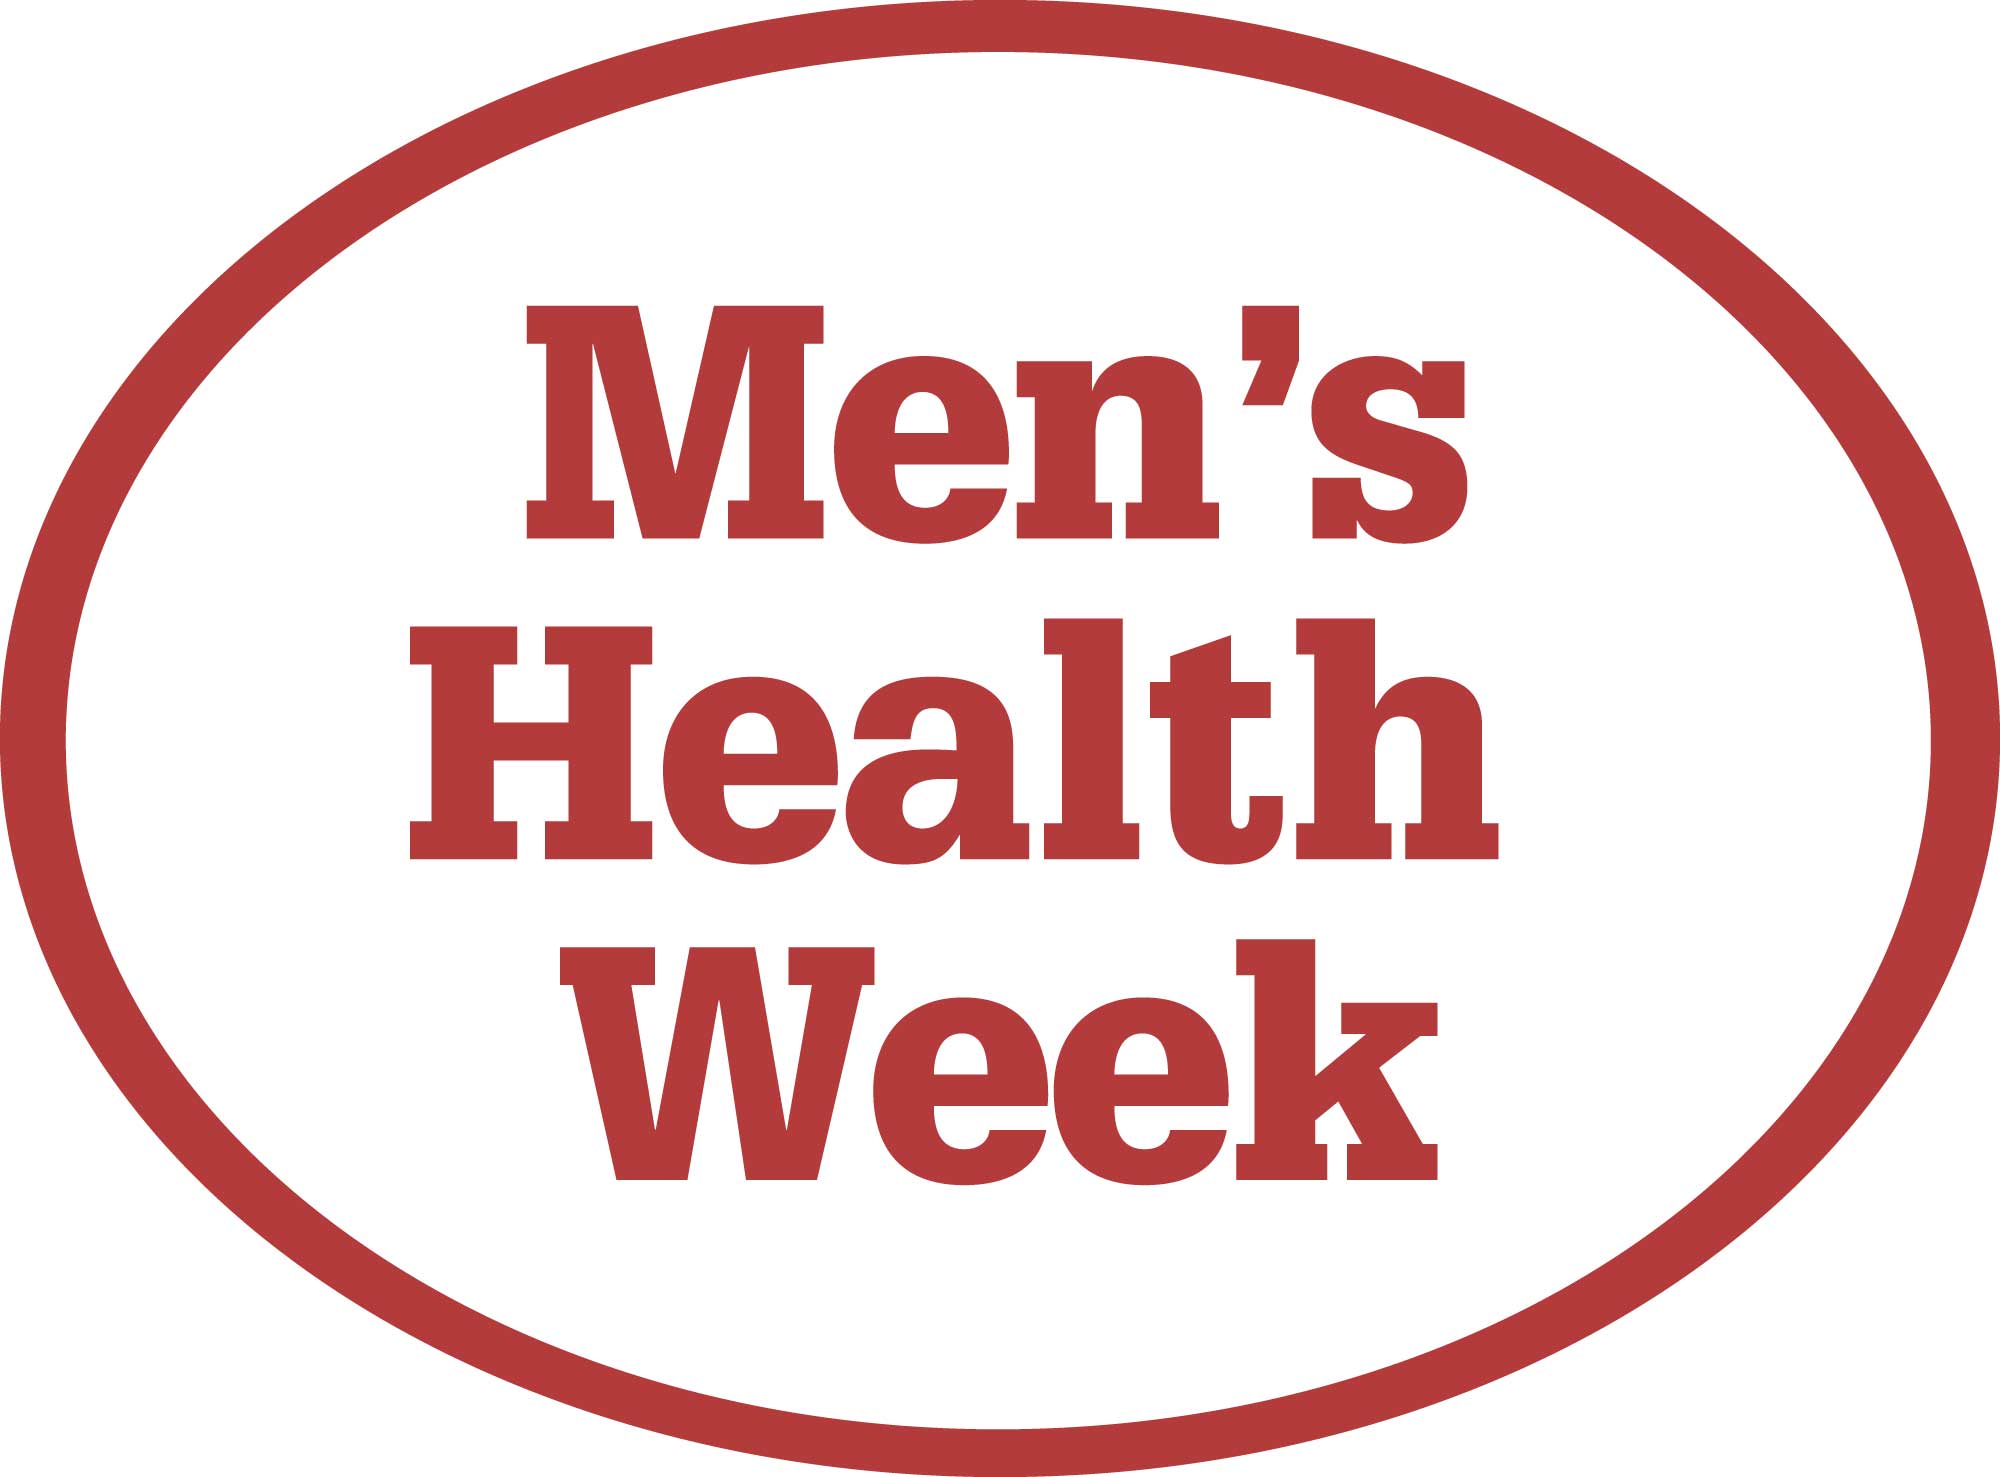 Men's Health Logo - Men's Health Week - Download Logos